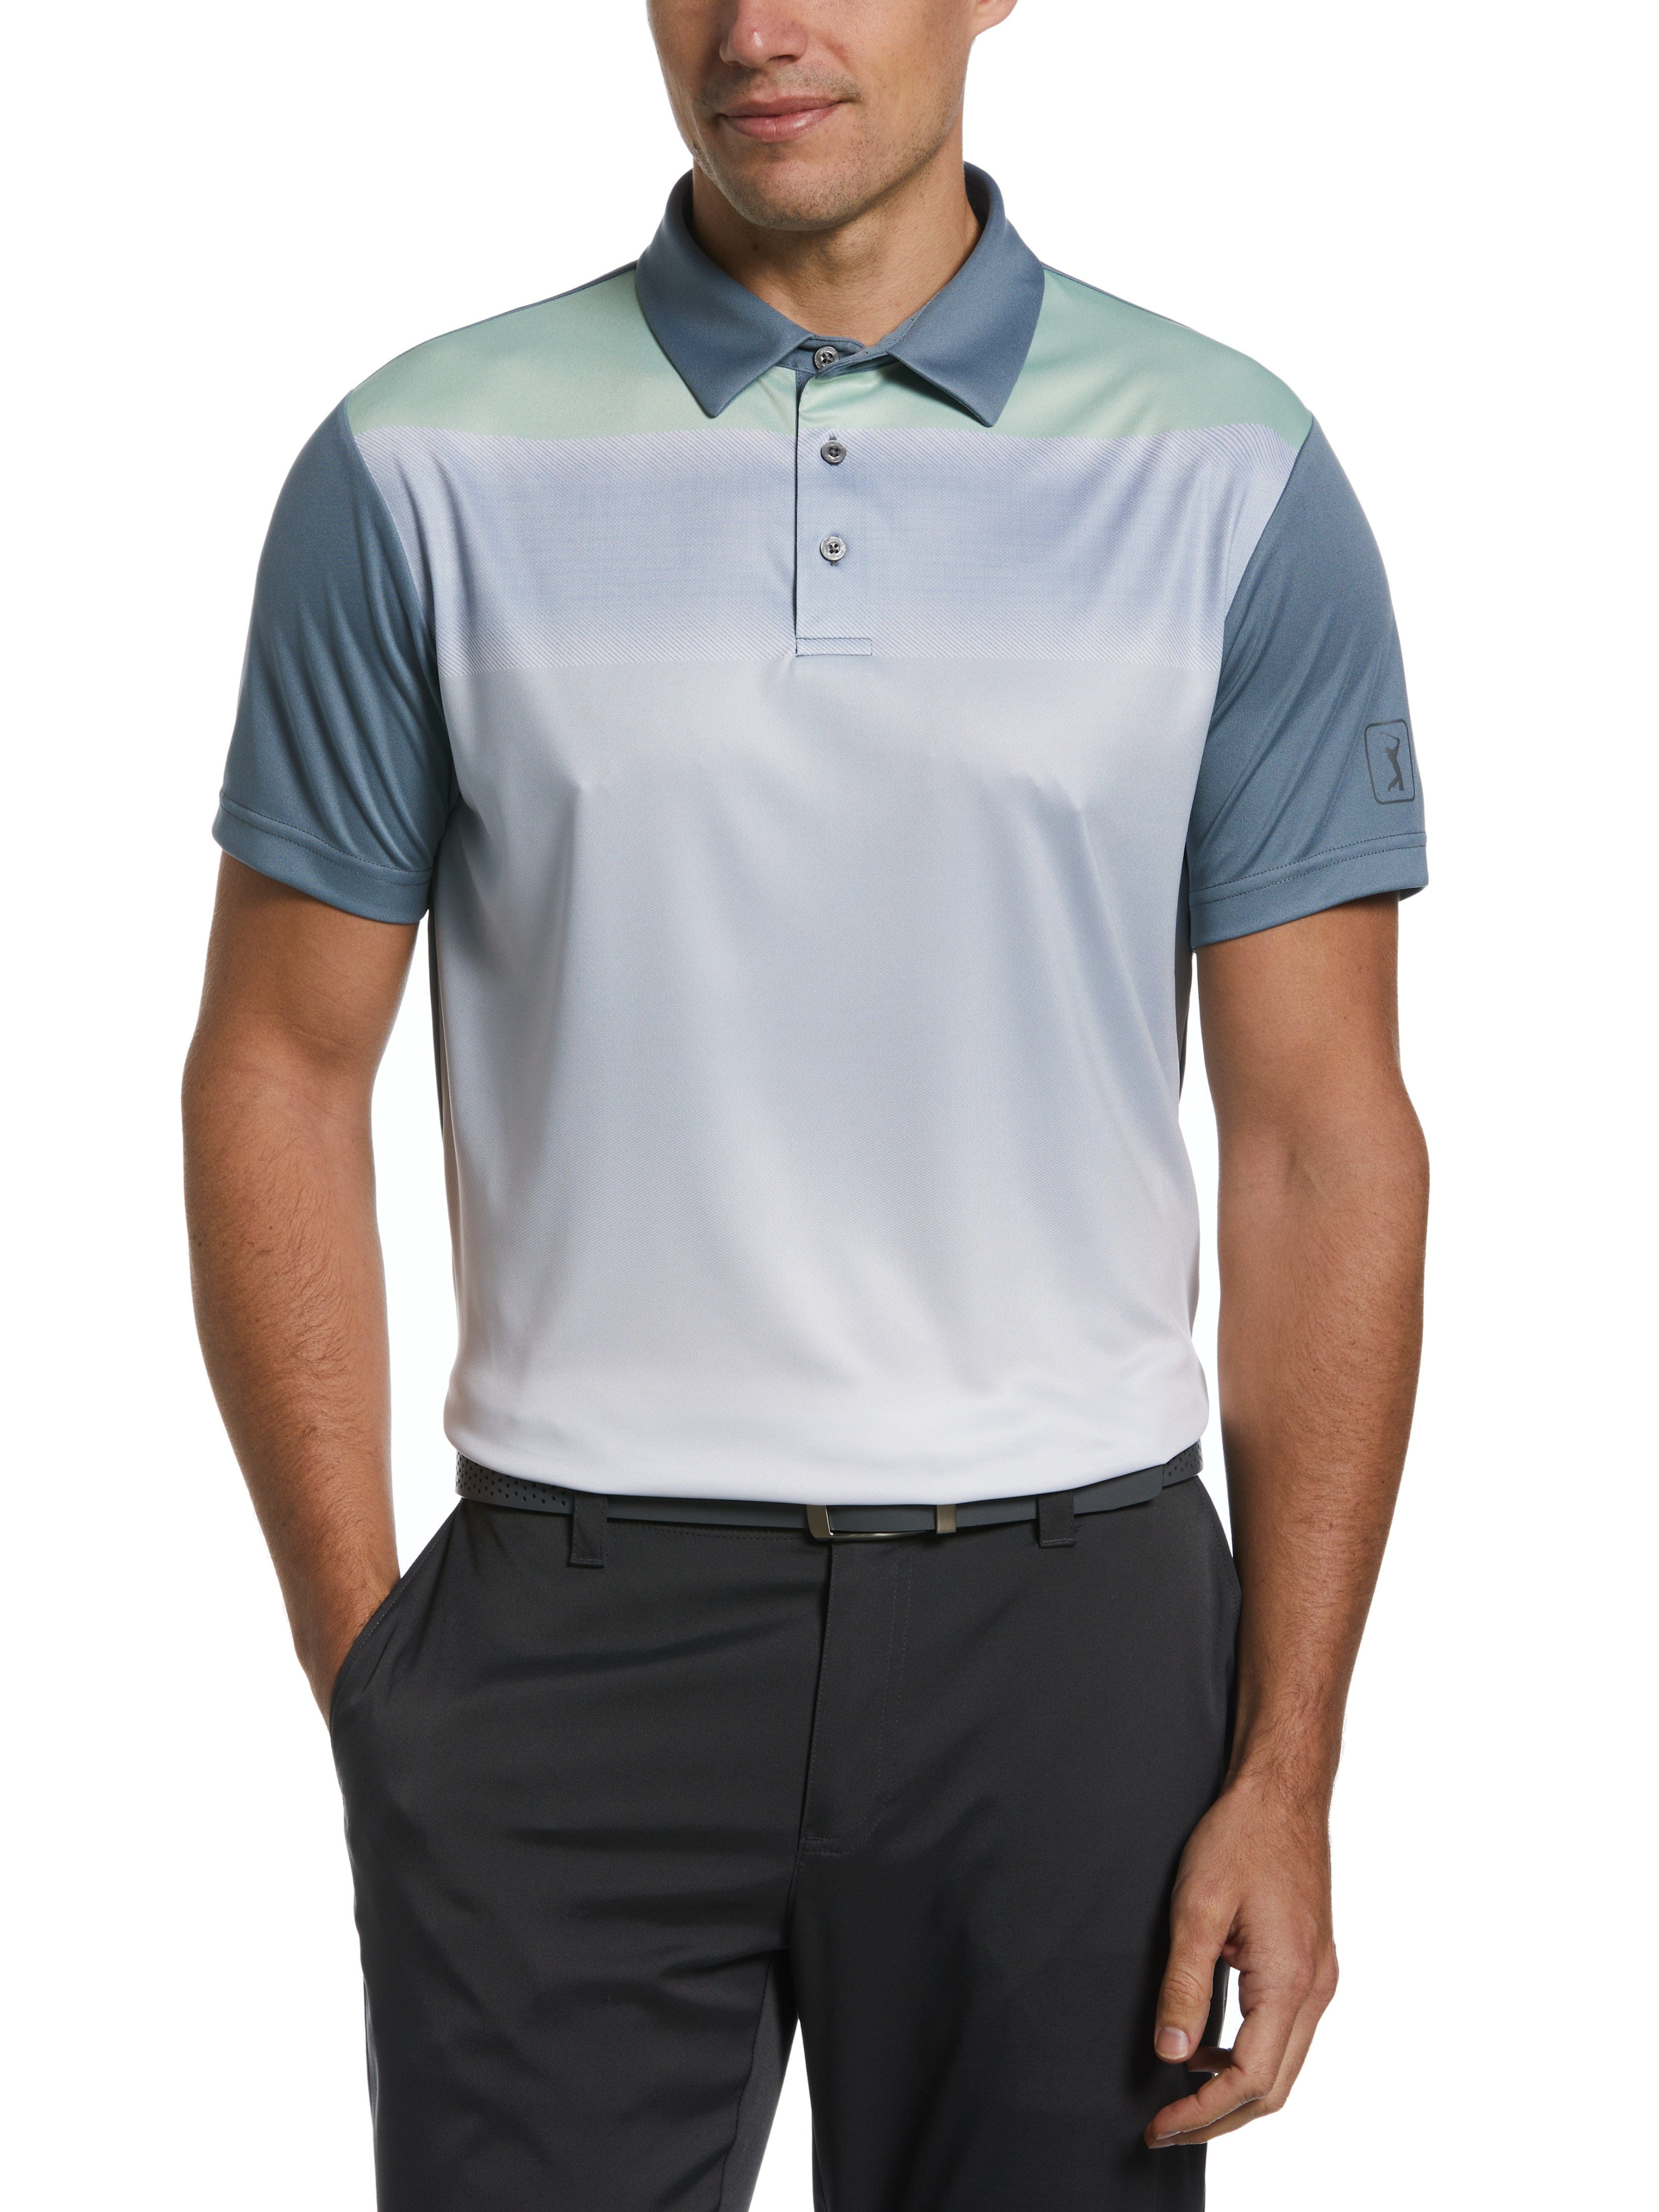 PGA TOUR Apparel Mens Blocked Print Golf Polo Shirt, Size Large, Tradewinds Gray, 100% Polyester | Golf Apparel Shop